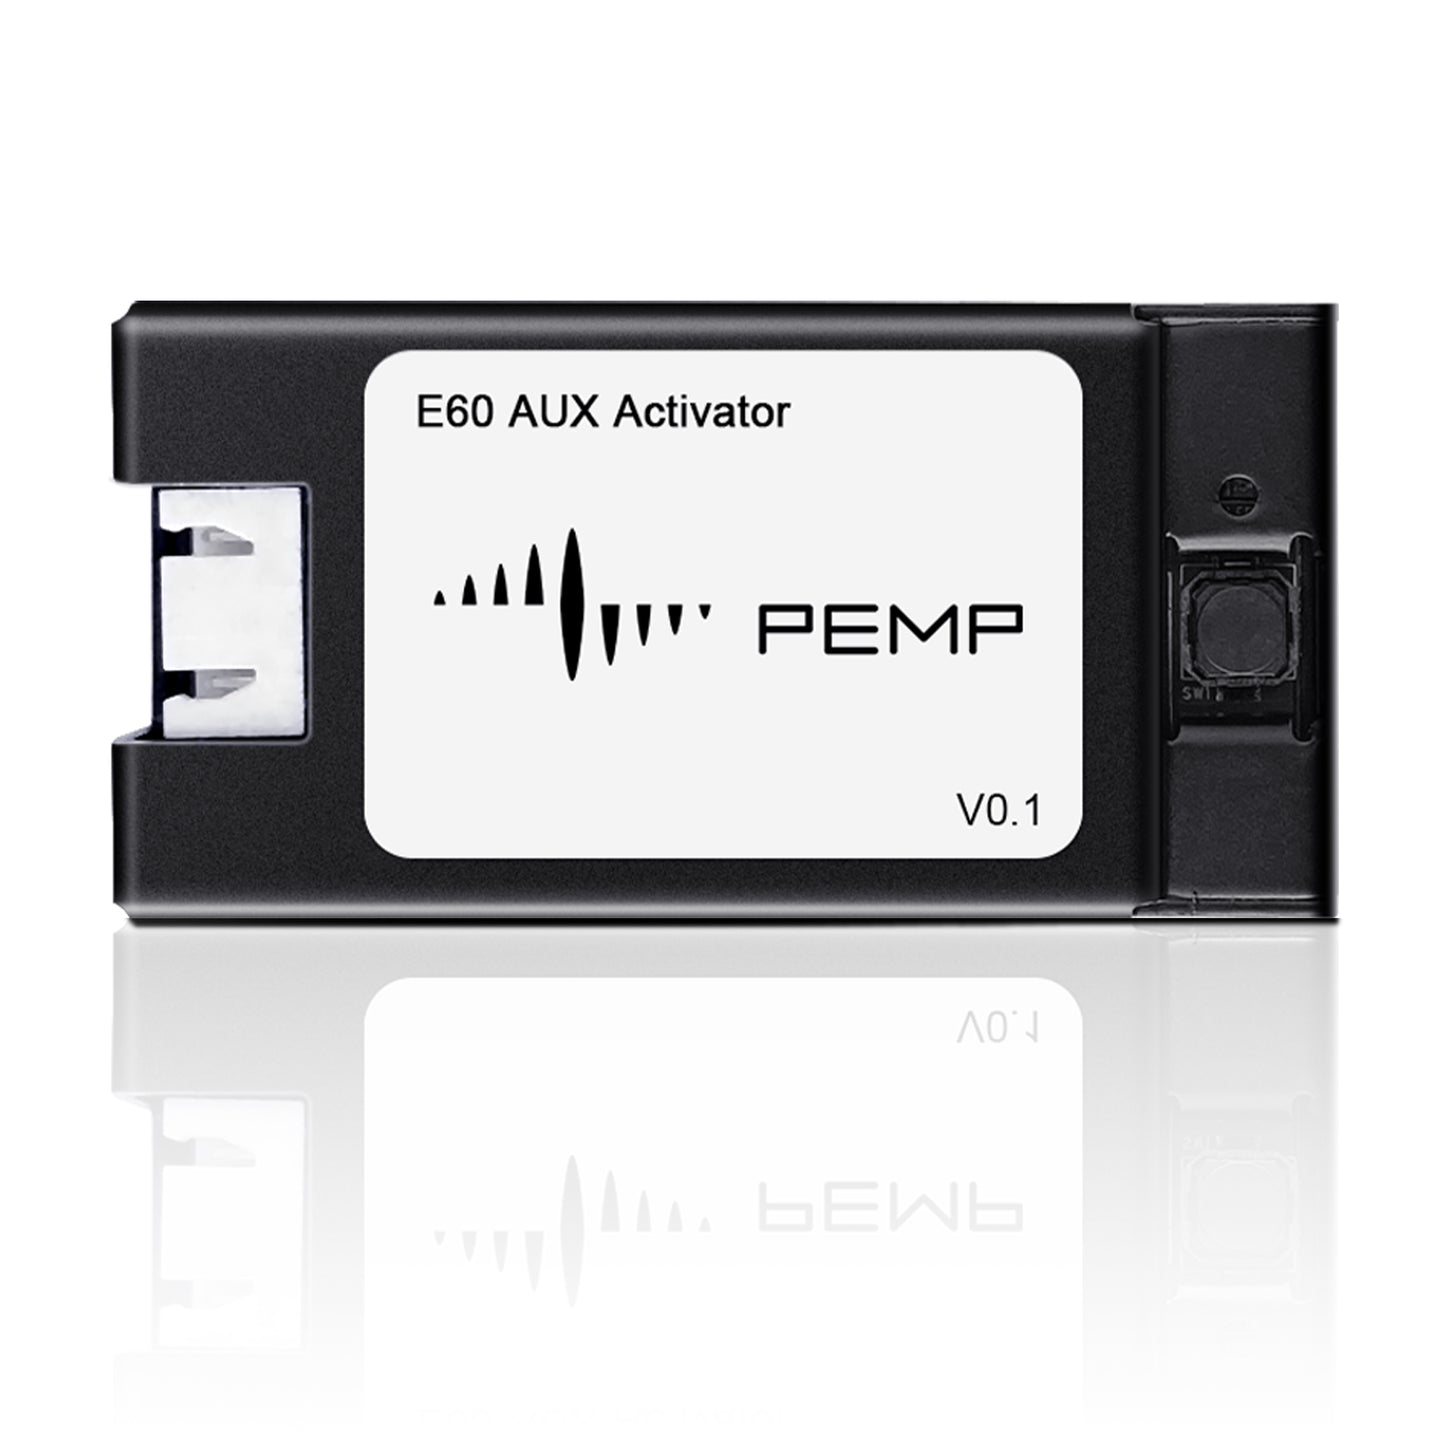 PEMP E60 Aux Adapter Open The Aux Audio of The Original Car for BMW E60 E61 E63 E64 CCC 2003-2010 (Note The Step 4)